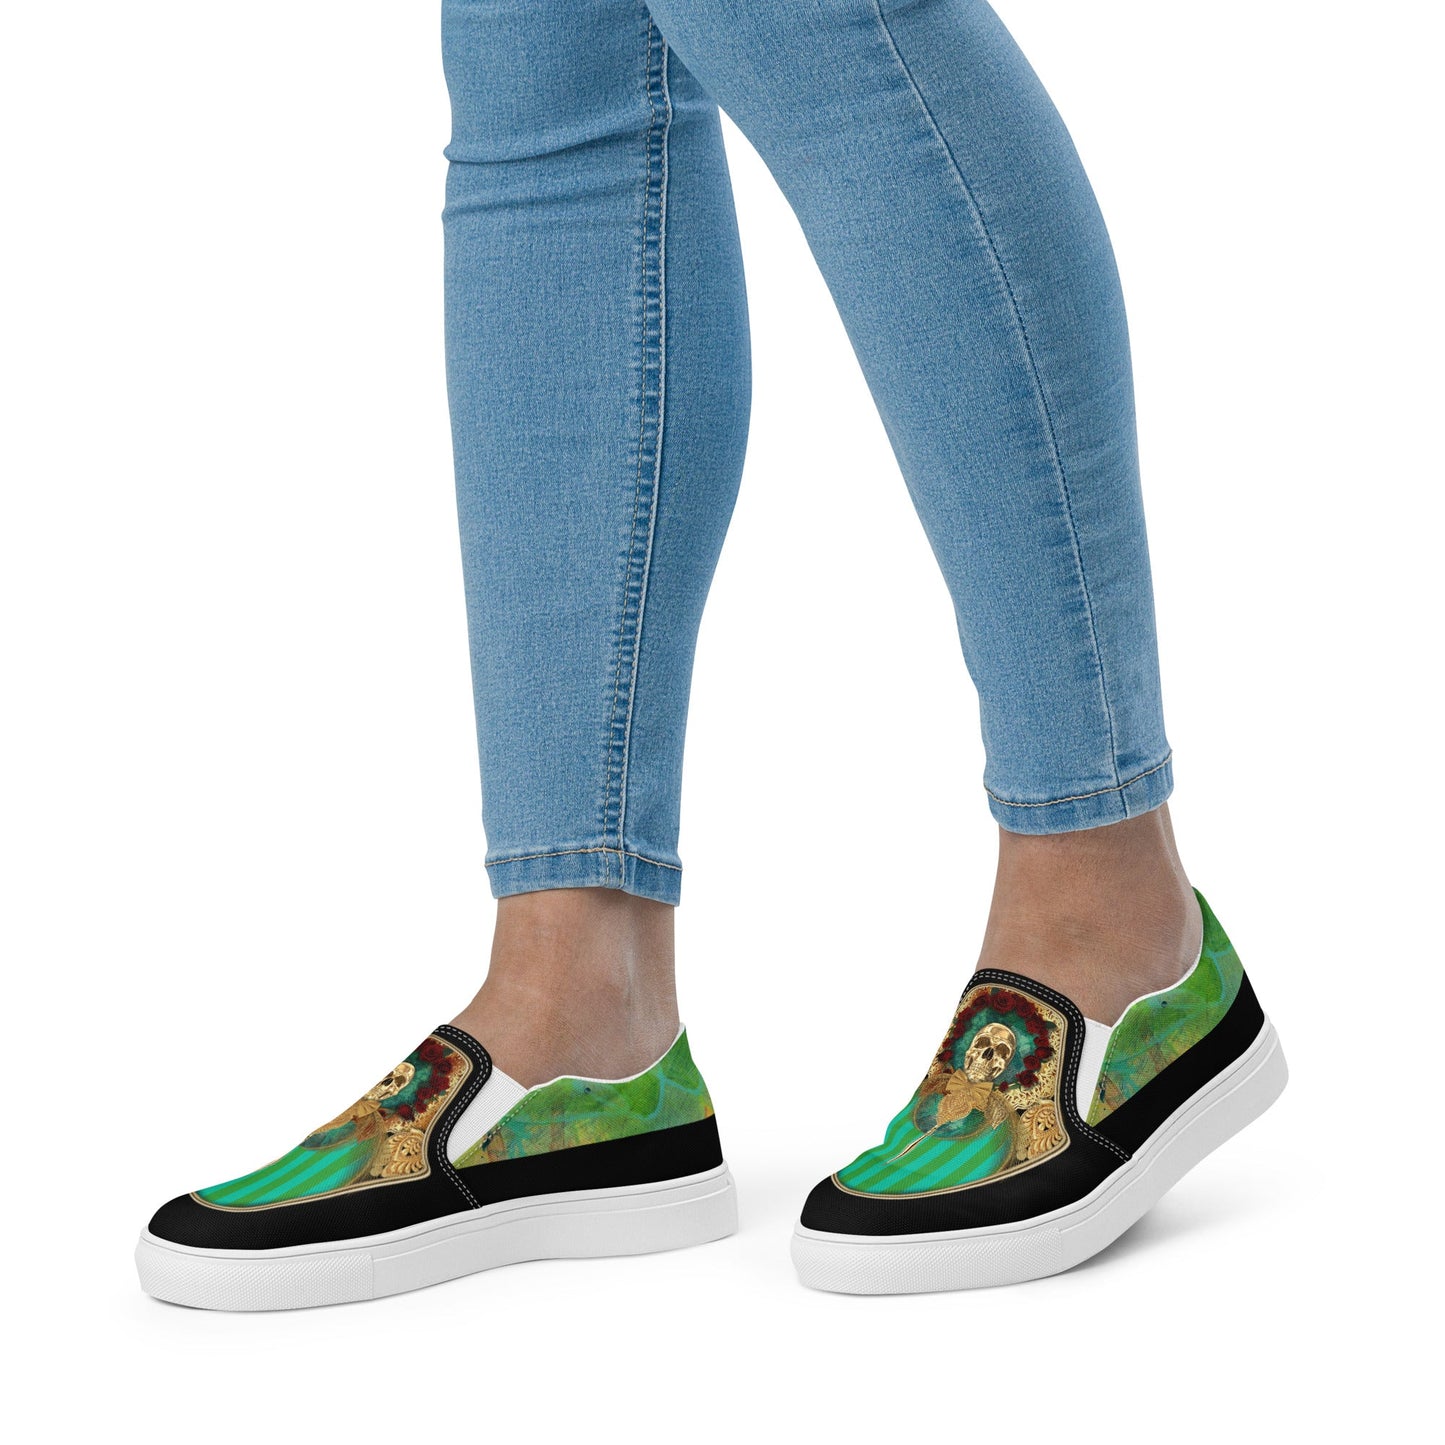 klasneakers Women’s slip-on canvas shoes - Green Skull